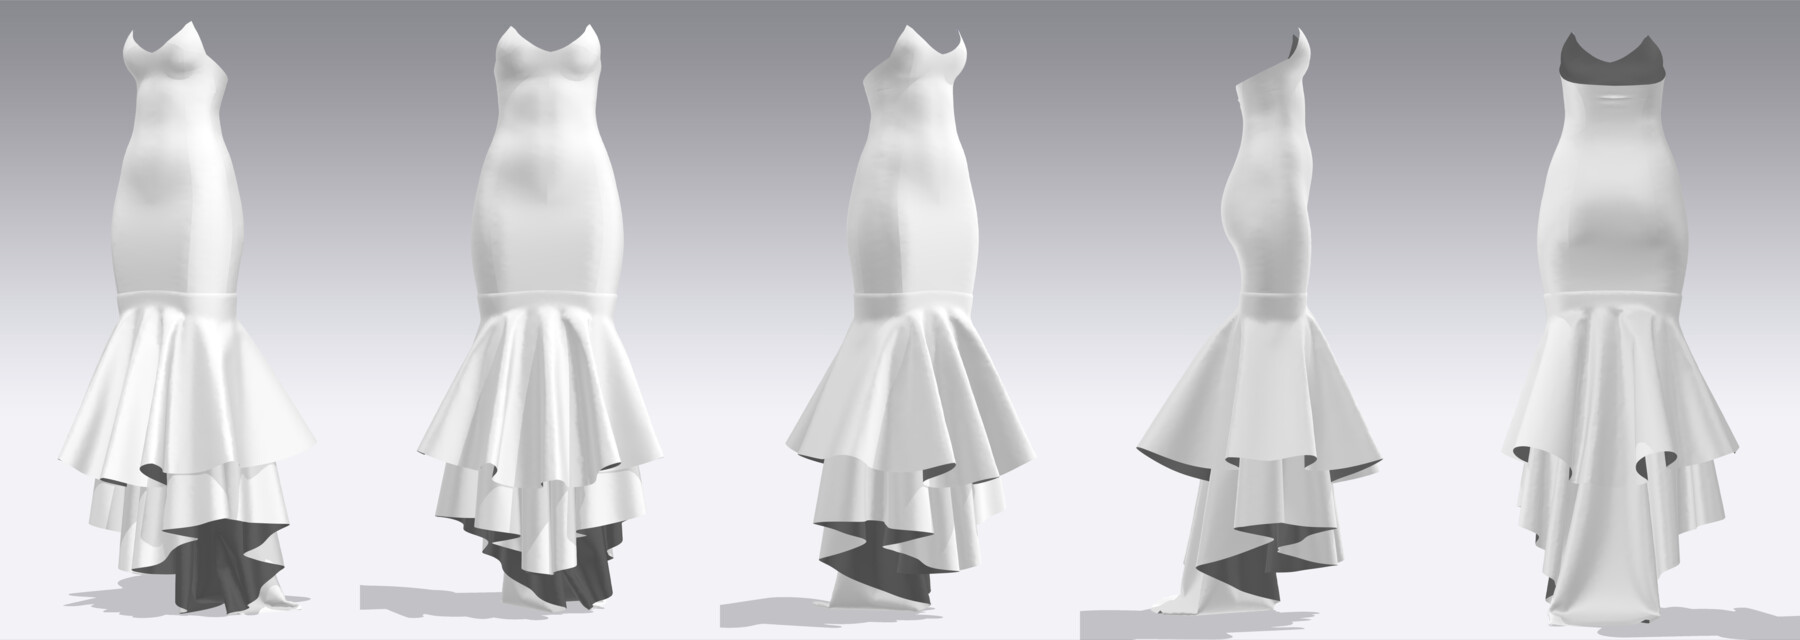 ArtStation - Dress Outfits MD CLO 3D ZPRJ , ZPAC project files 3D model ...